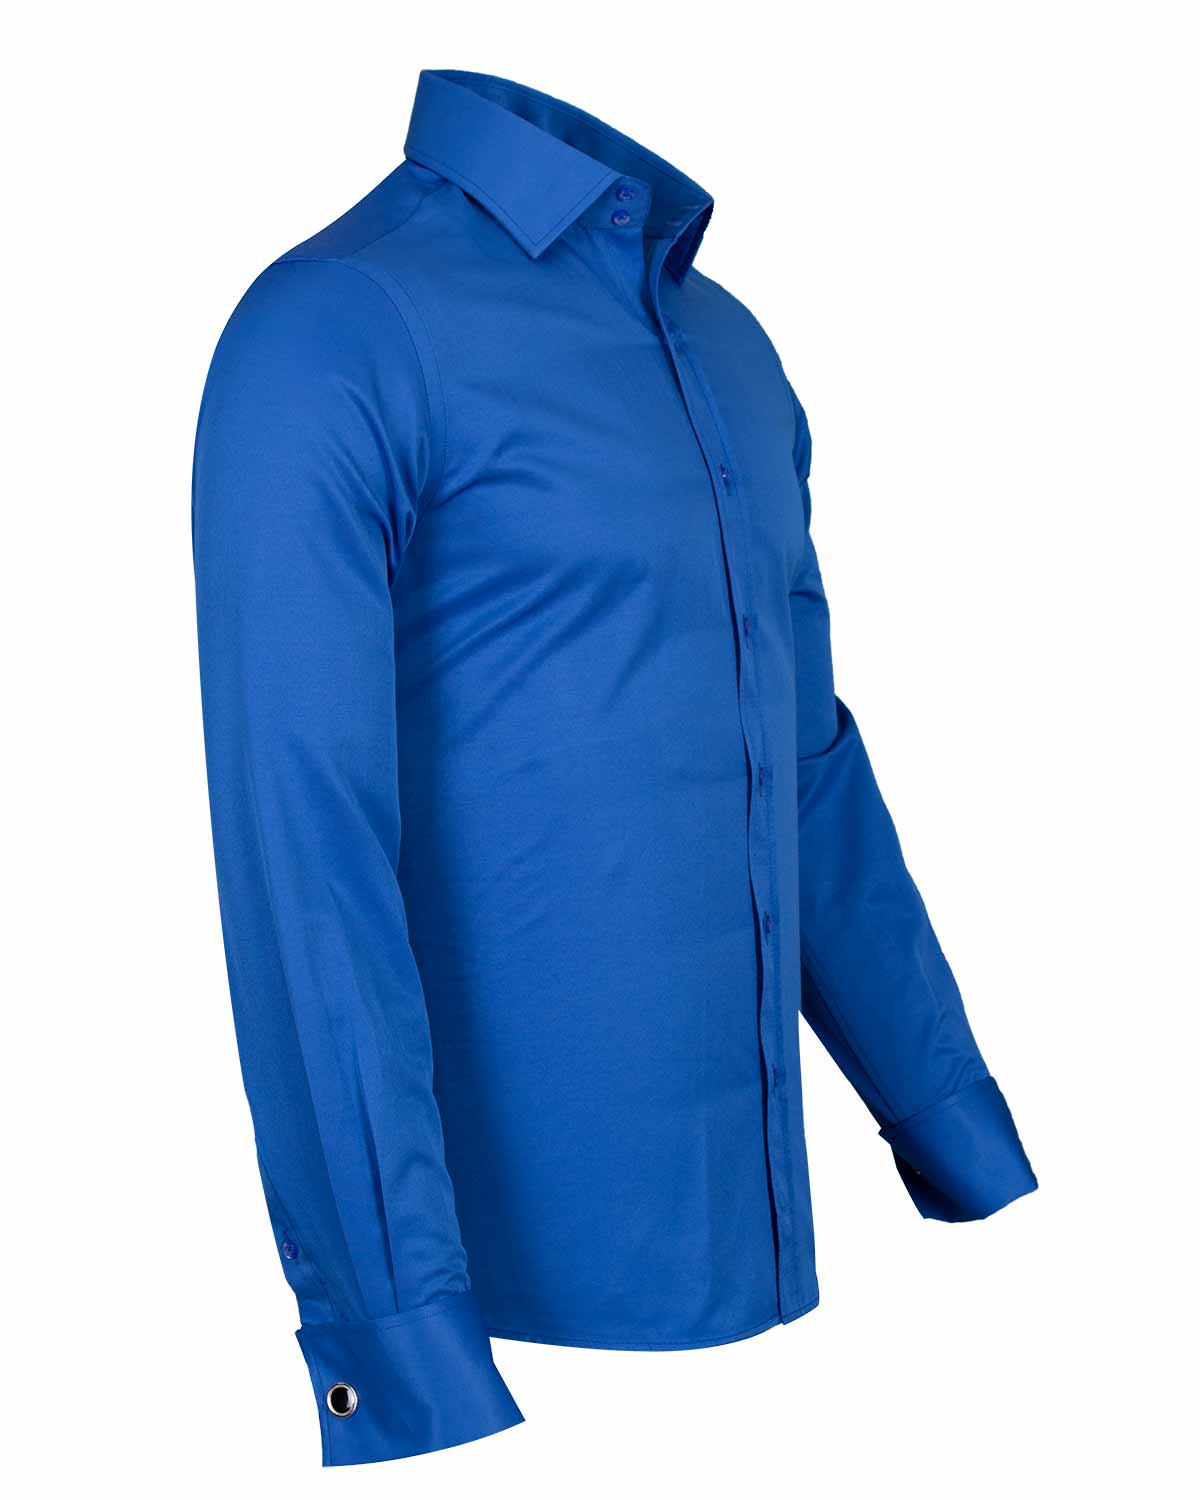 Royal Blue Plain Double Cuff Shirt